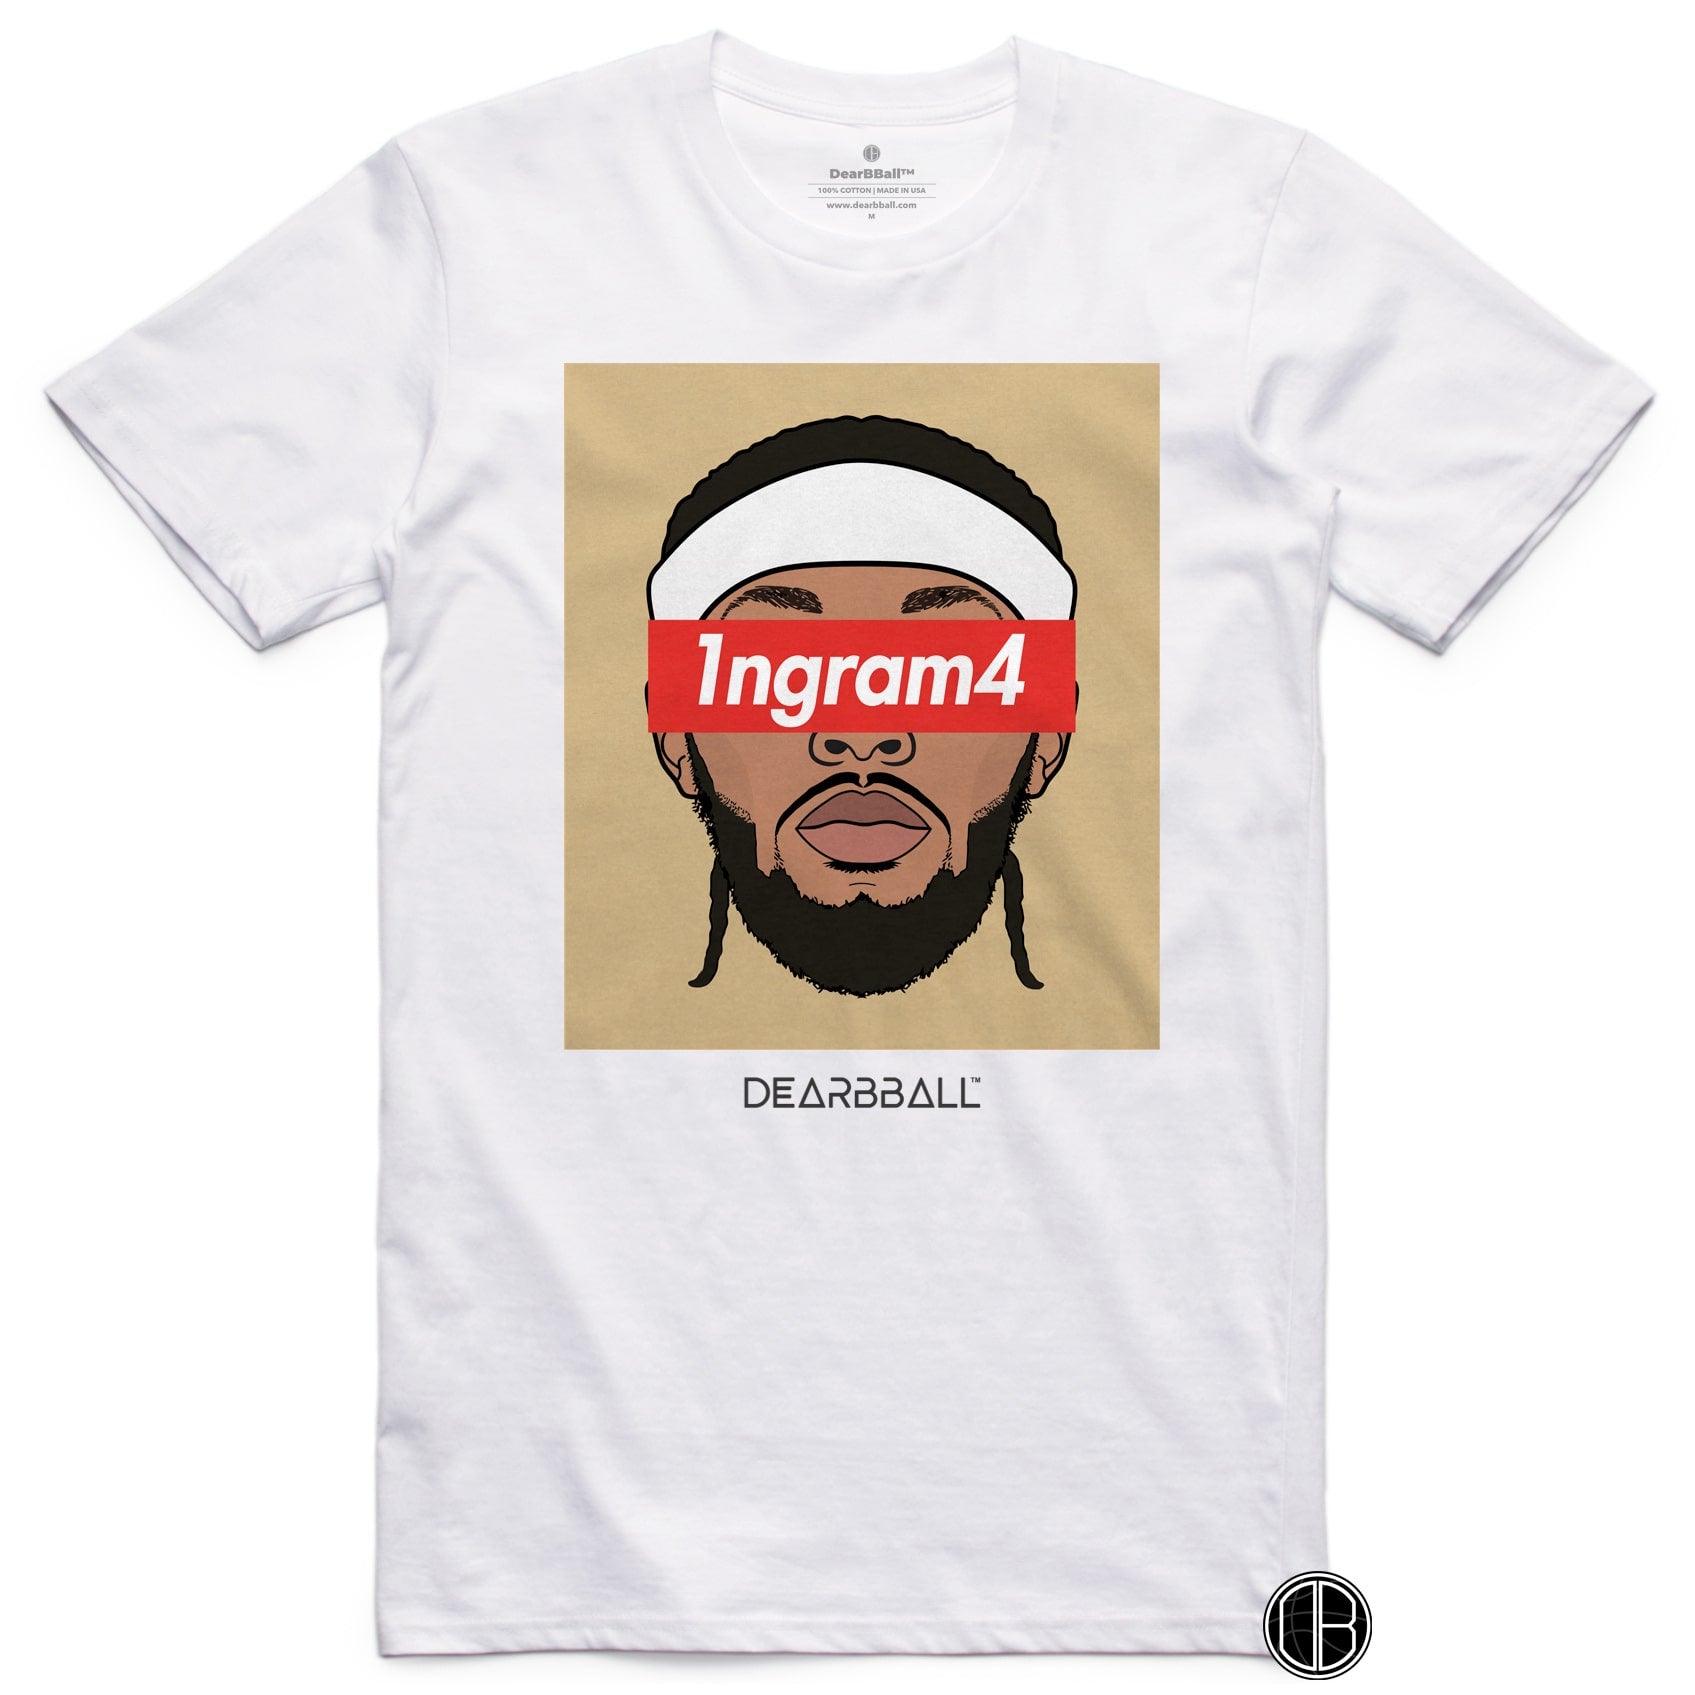 Brandon Ingram T-shirt Bio - 1ngram4 New Orleans Pelicans Basketball Dearbball blanc